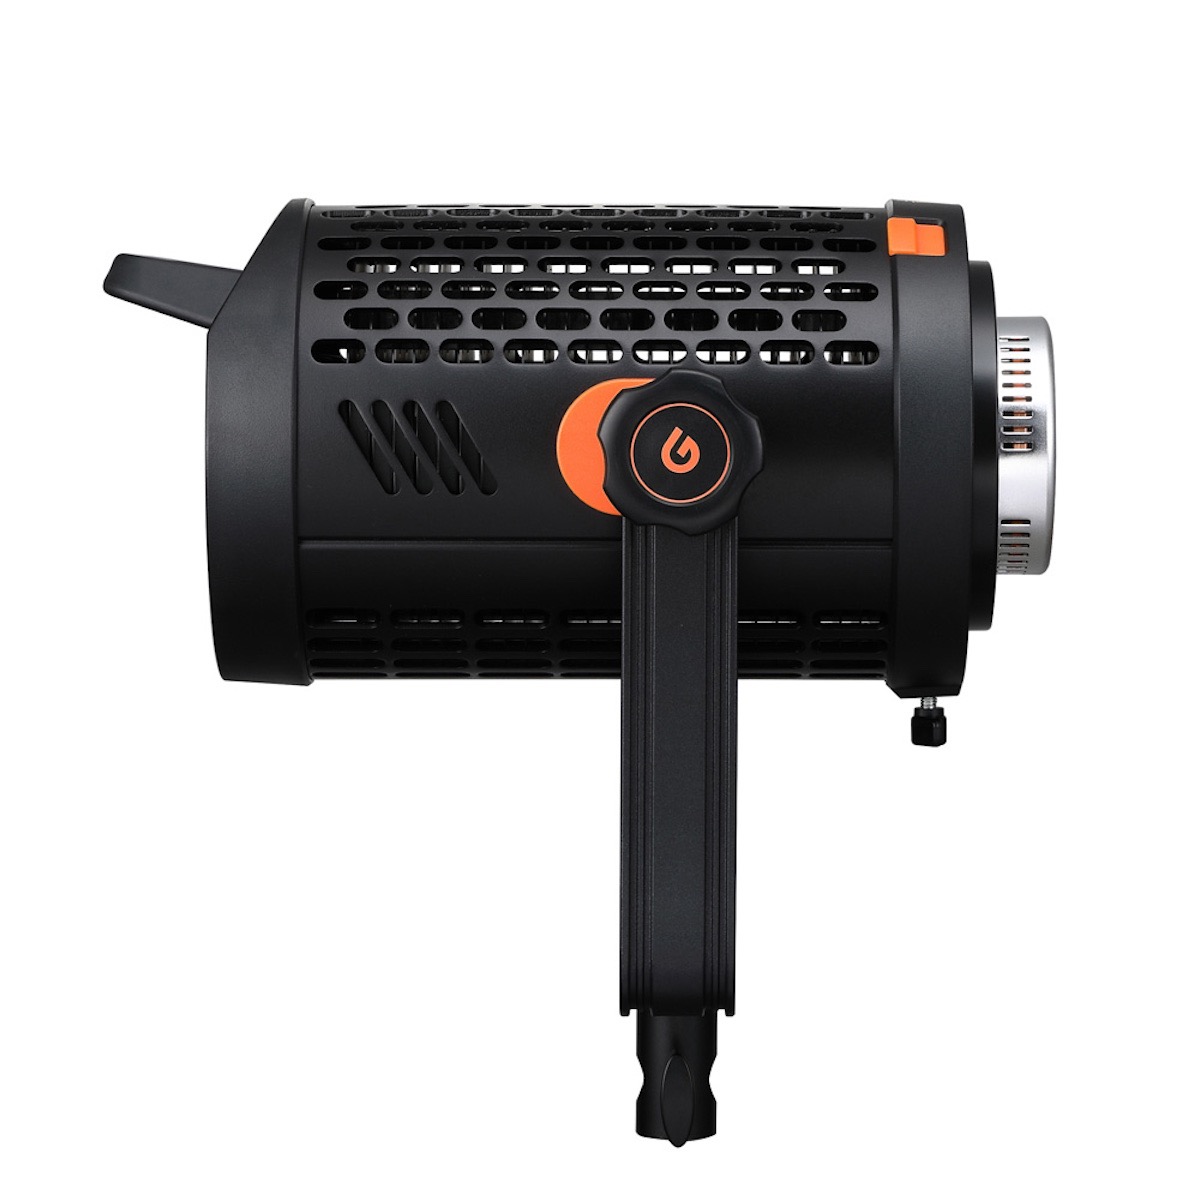 Godox LED UL150 Silent-Videoleuchte